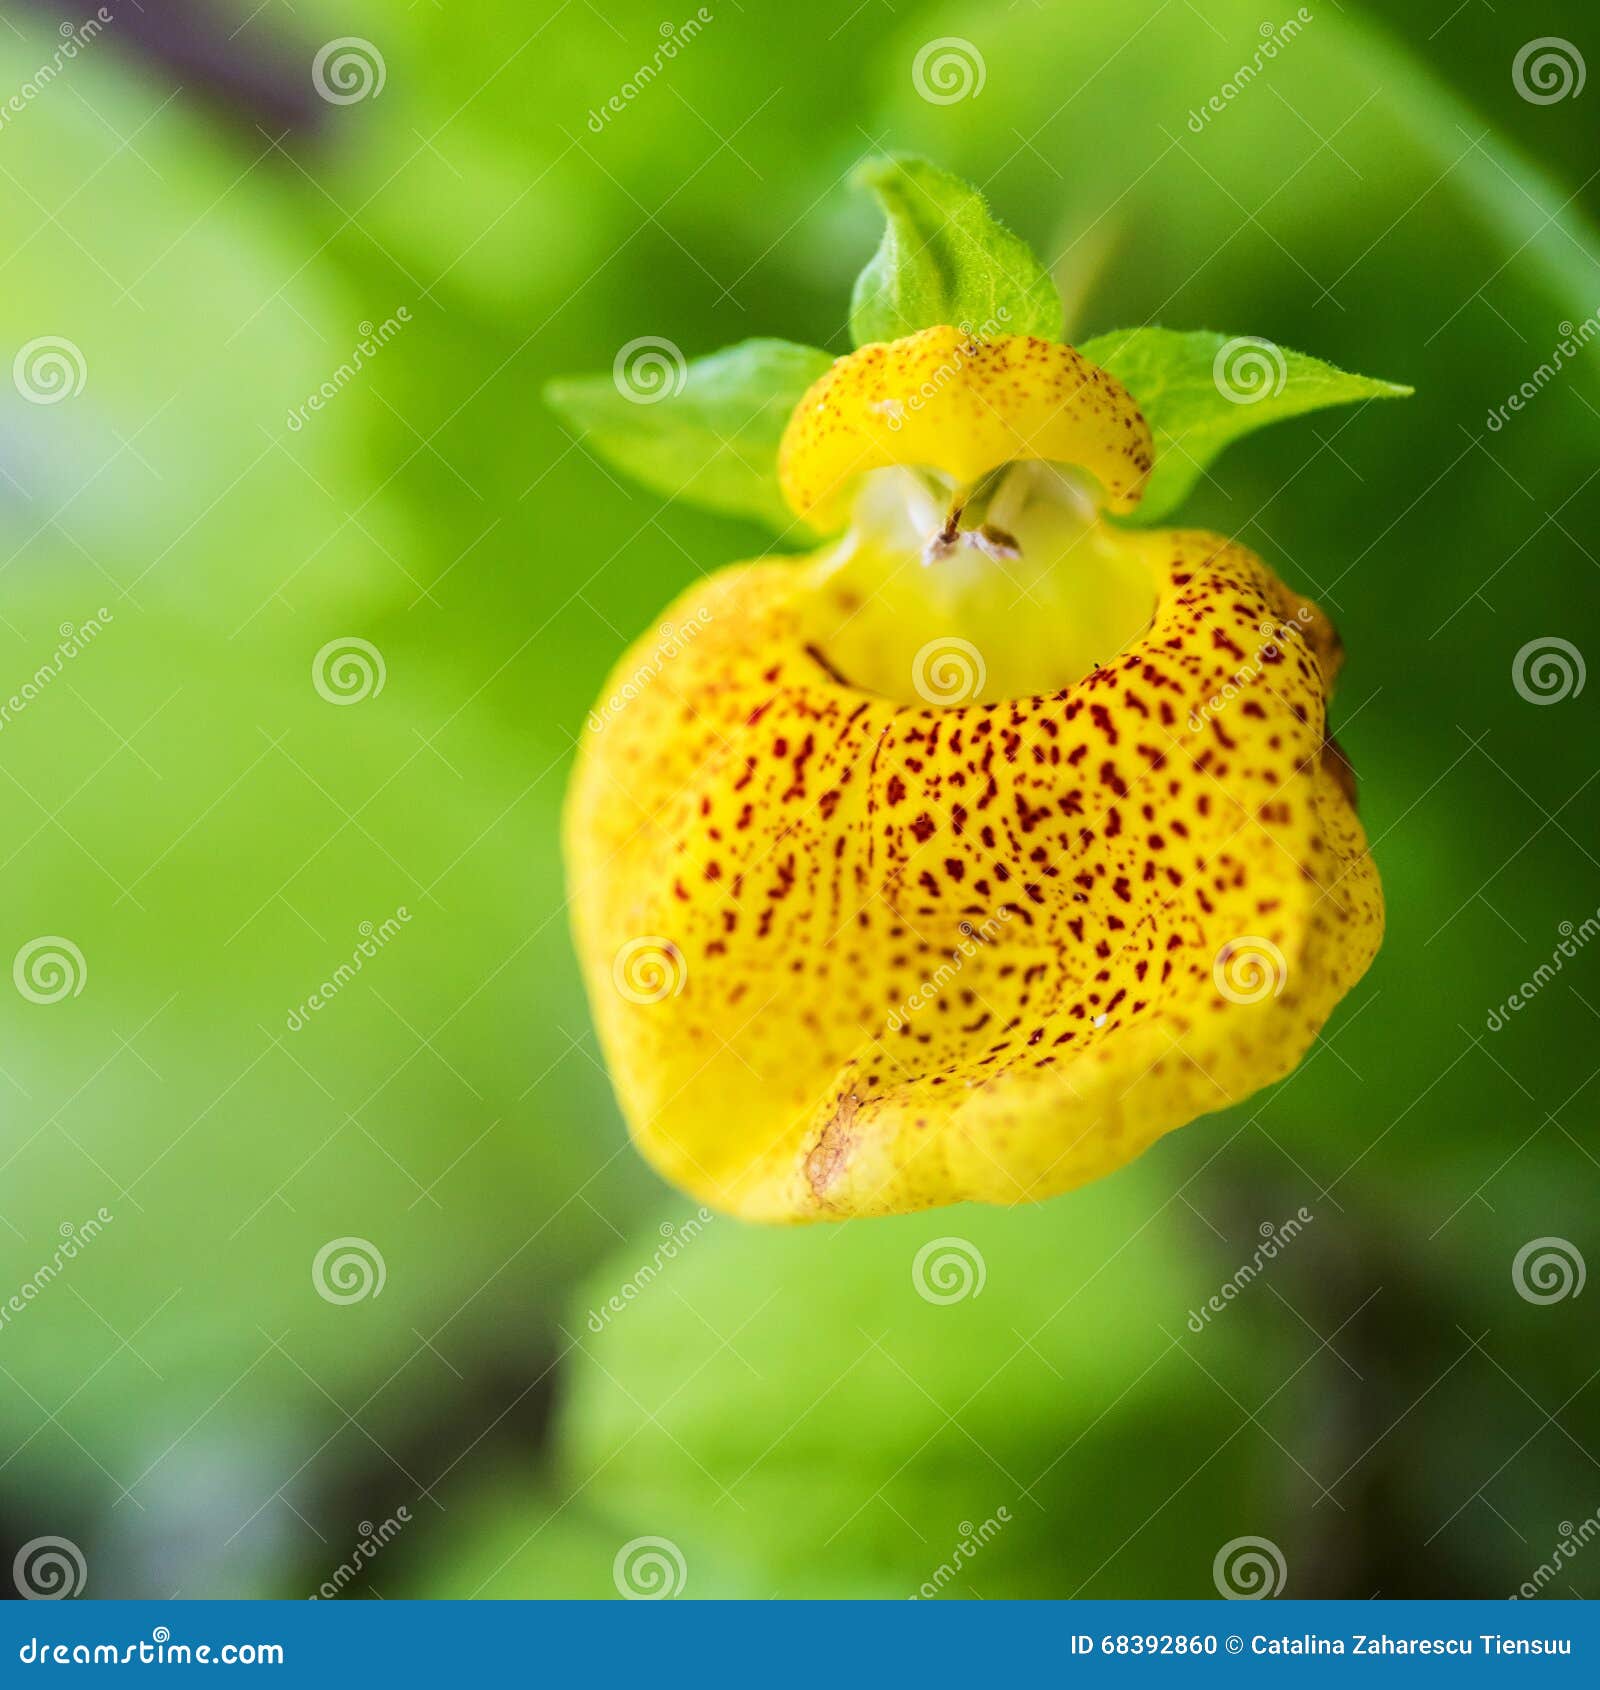 Calceolaria Stock Photos, Royalty Free Calceolaria Images | Depositphotos